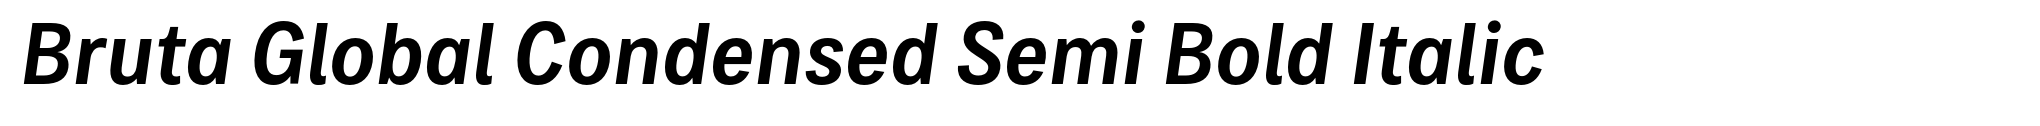 Bruta Global Condensed Semi Bold Italic image